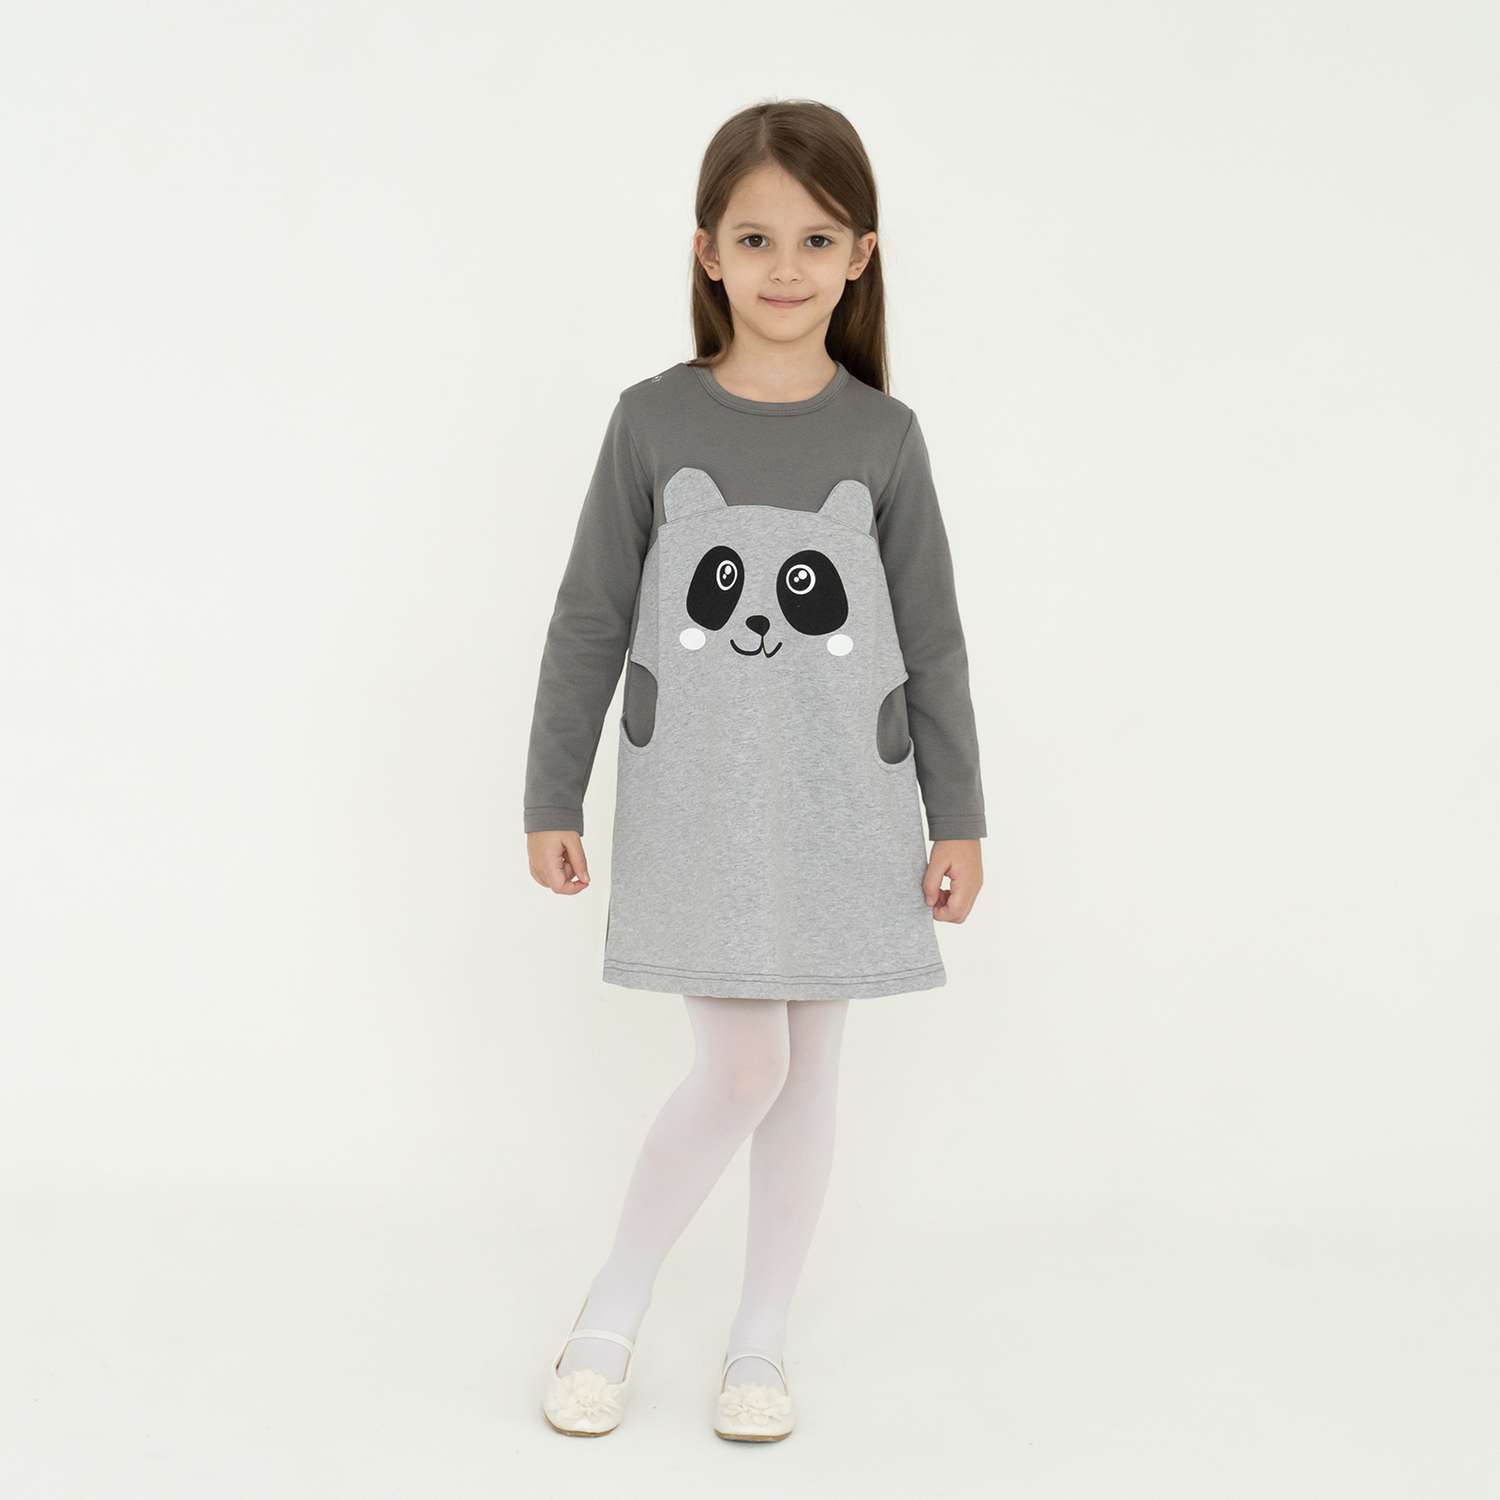 Платье Утенок 923п серый меланж панда - фото 1